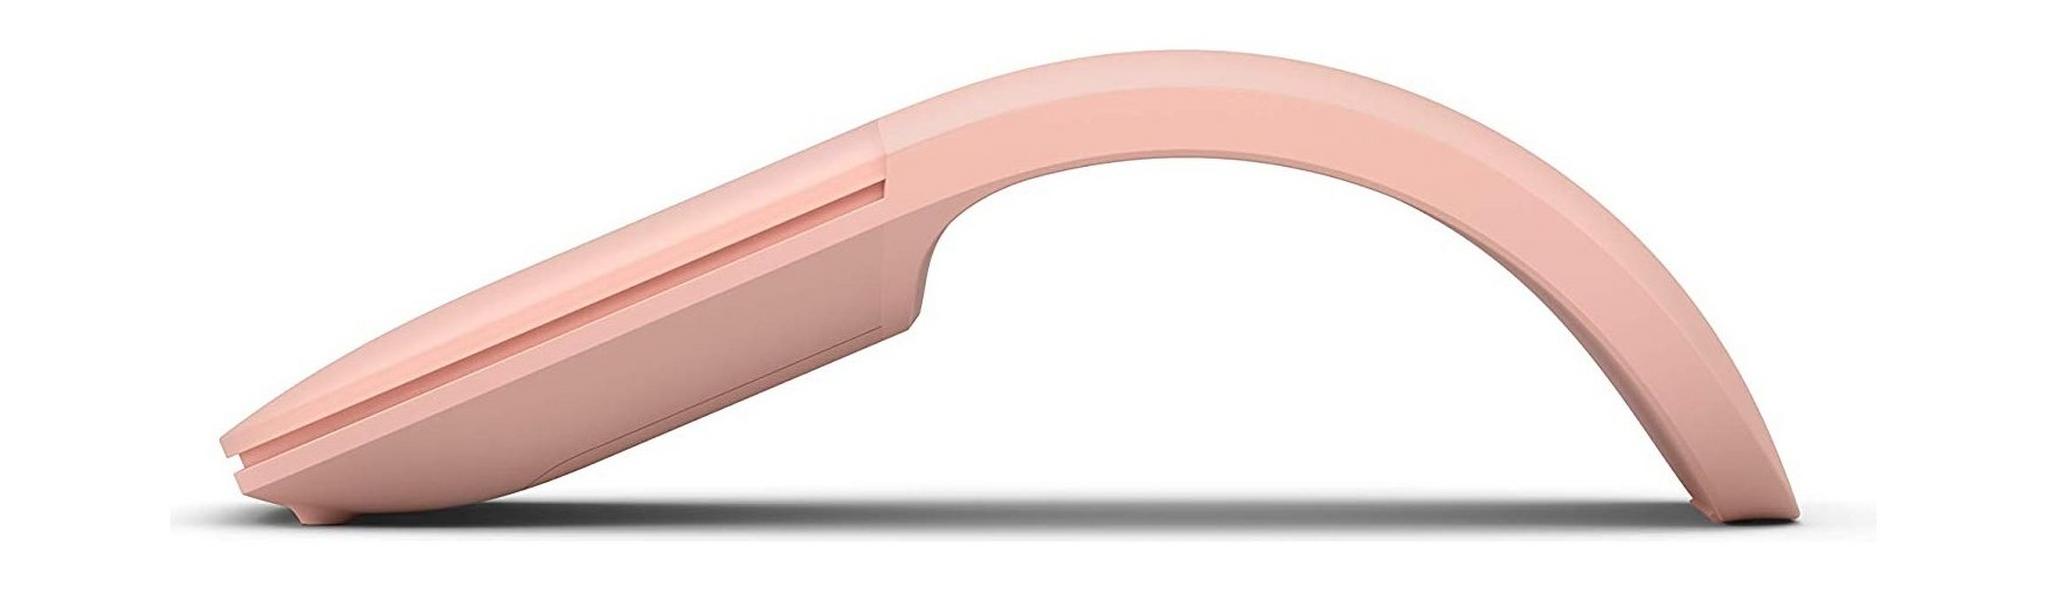 Microsoft ARC Wireless Mouse - Pink